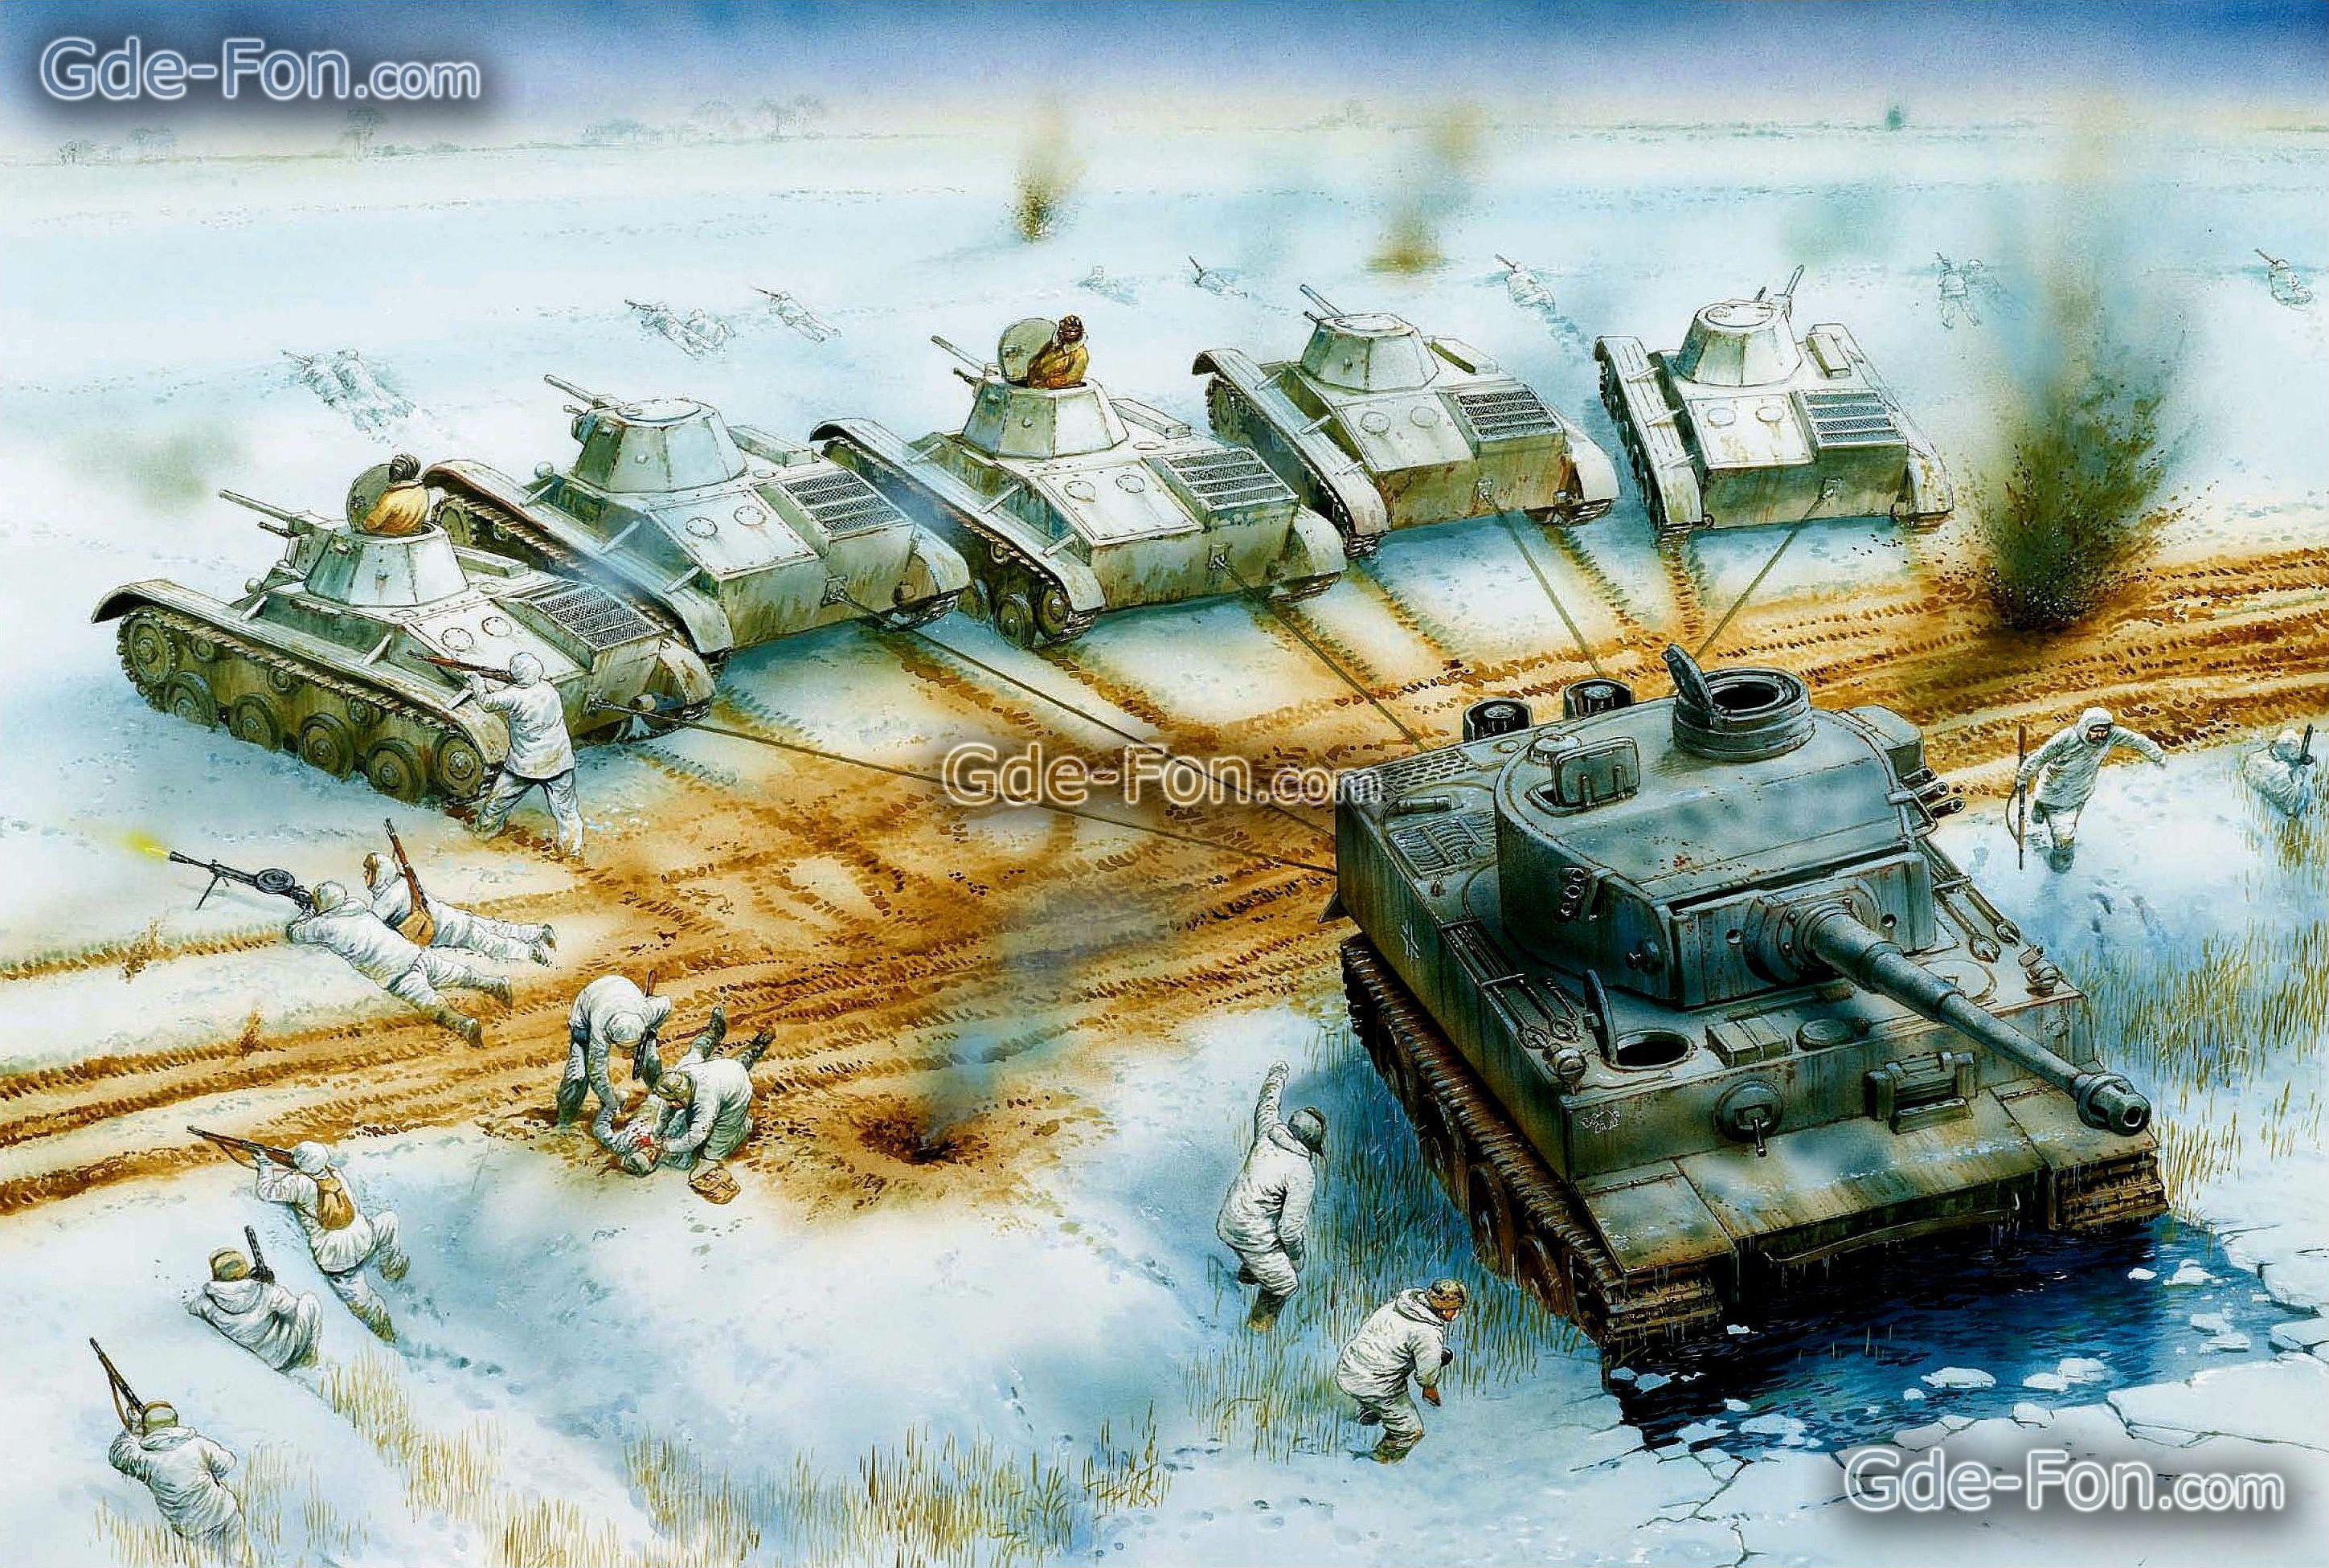 600668_art_tank_tigr_catching-the-tiger_18-january_1943_2898x1951_www.Gde-Fon.com.jpg